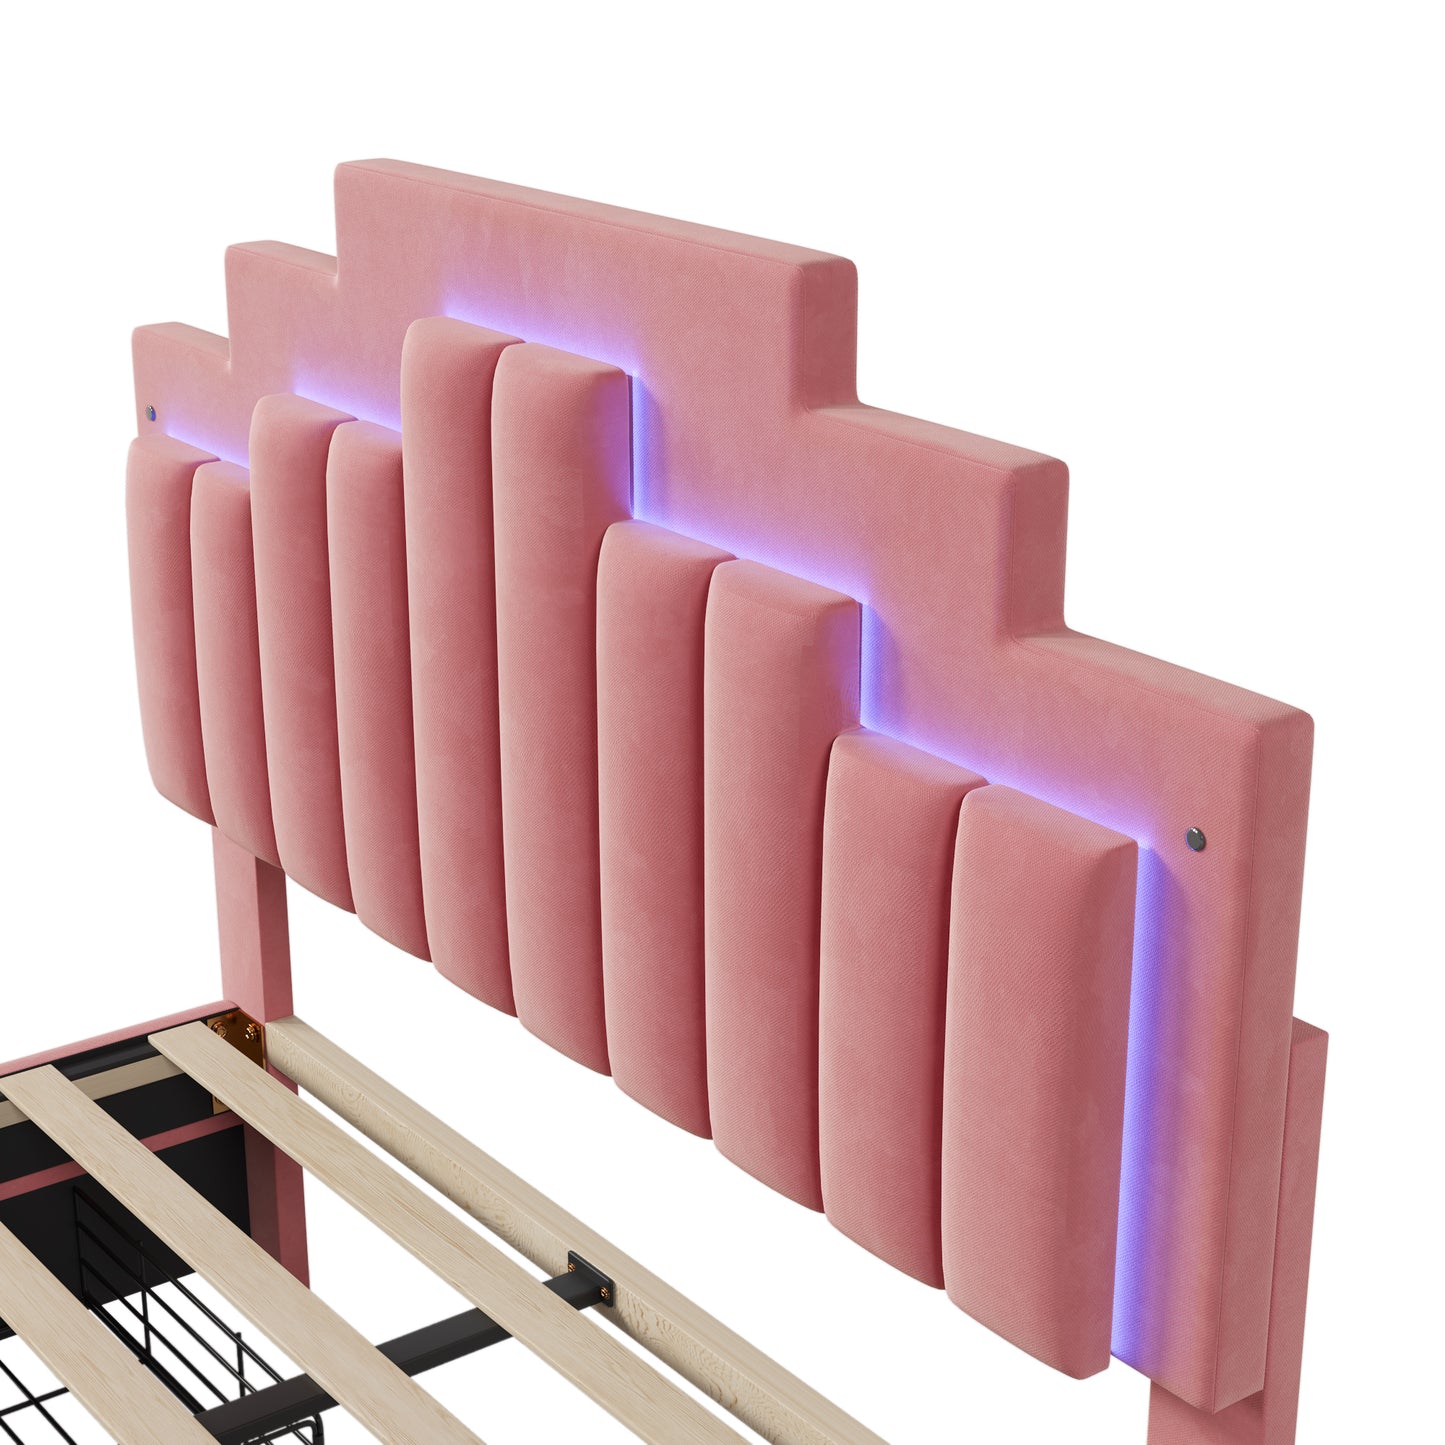 Full Size Upholstered Platform Bed with LED Lights and 4 Drawers, Stylish Irregular Metal Bed Legs Design, Pink